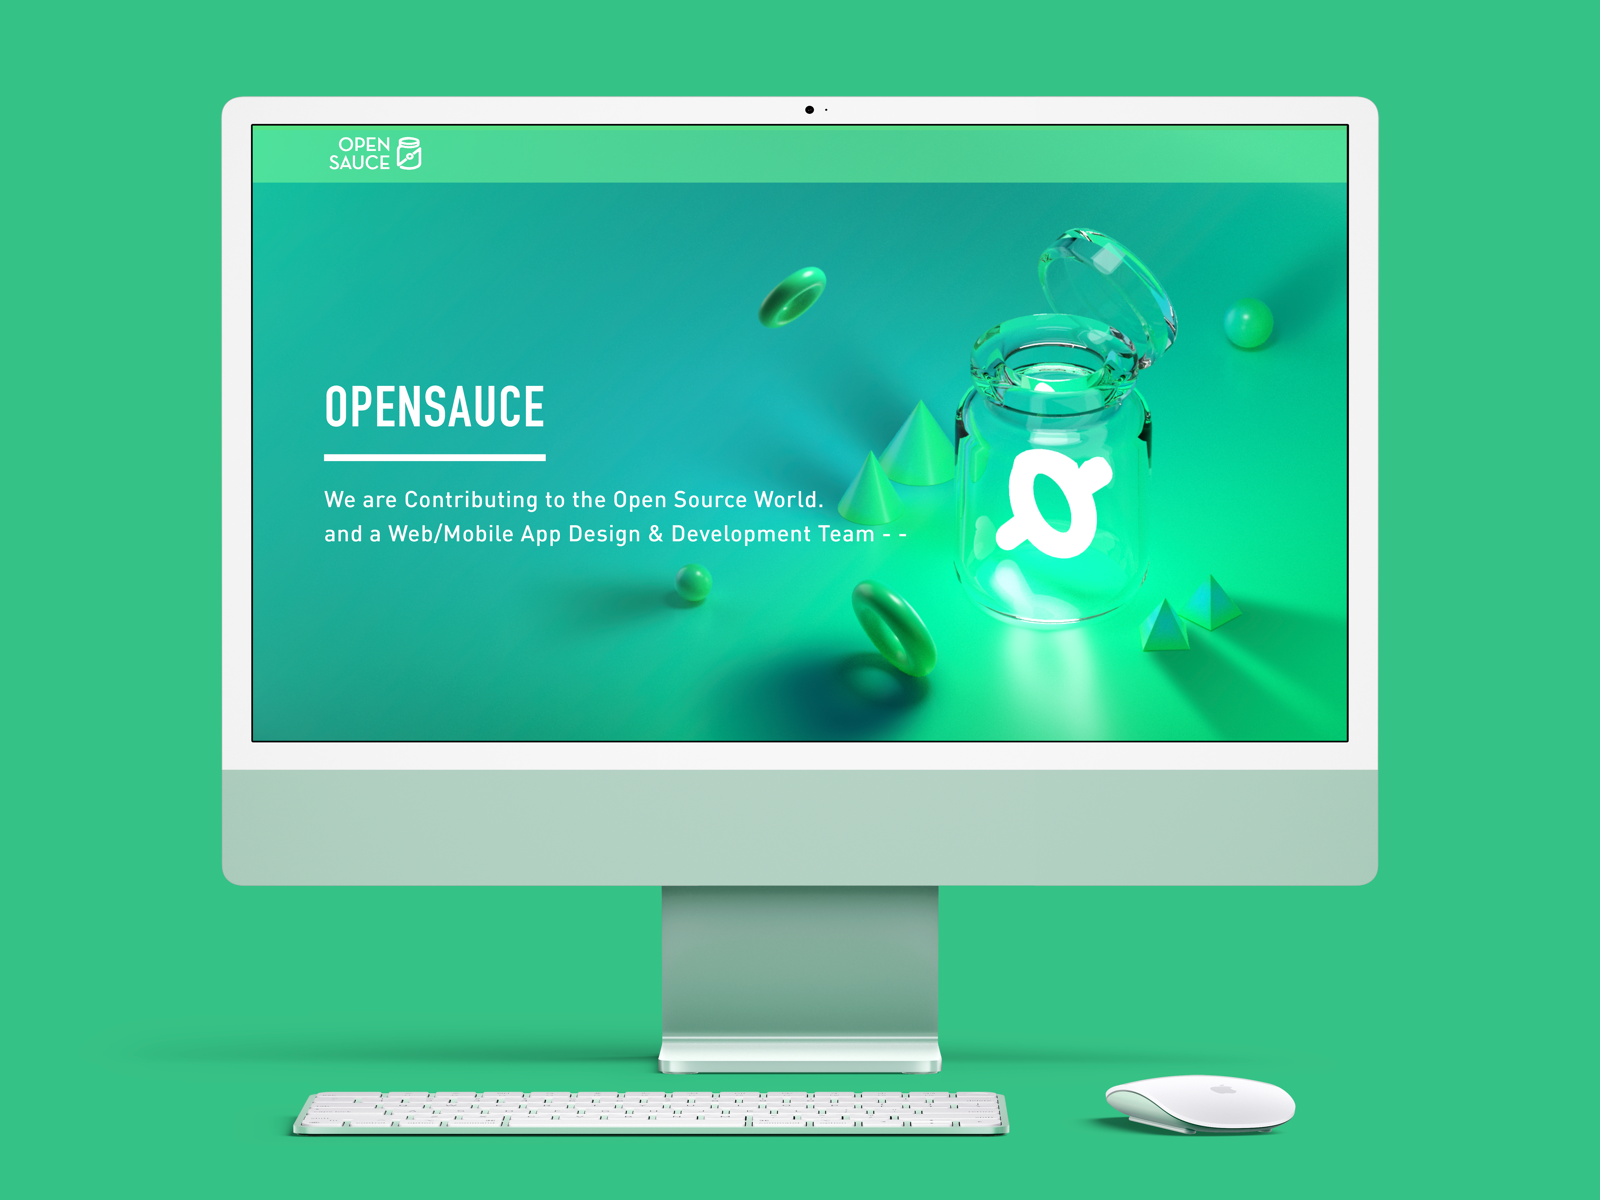 Opensauce website design by psycho on Dribbble